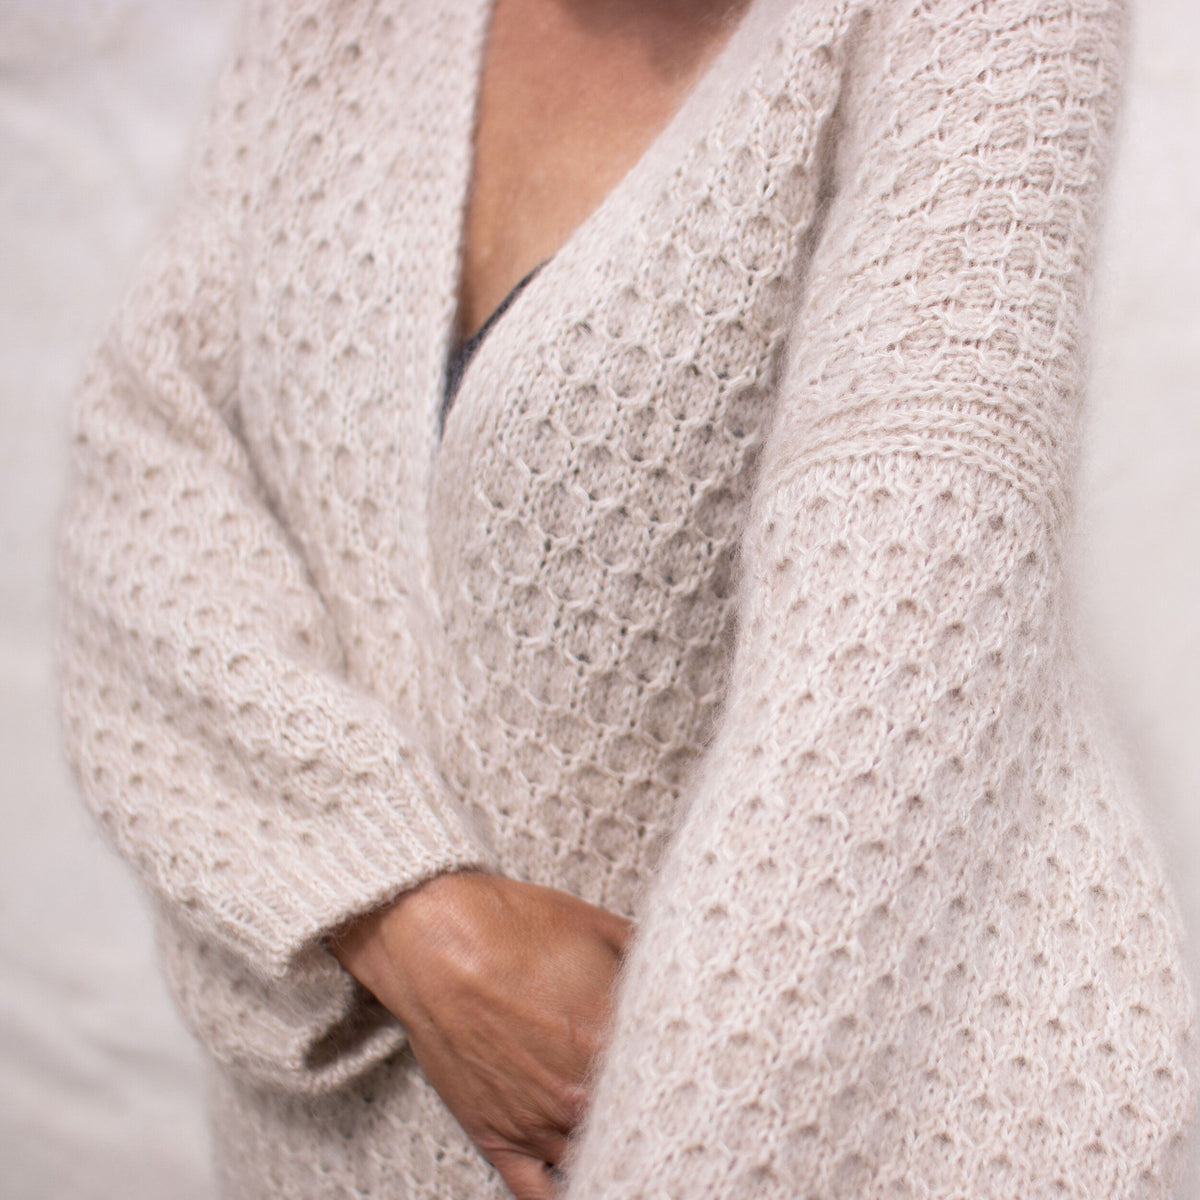 Cardi V-neck sweater by Anne Ventzel, No 2 + Silk mohair yarn kit (ex